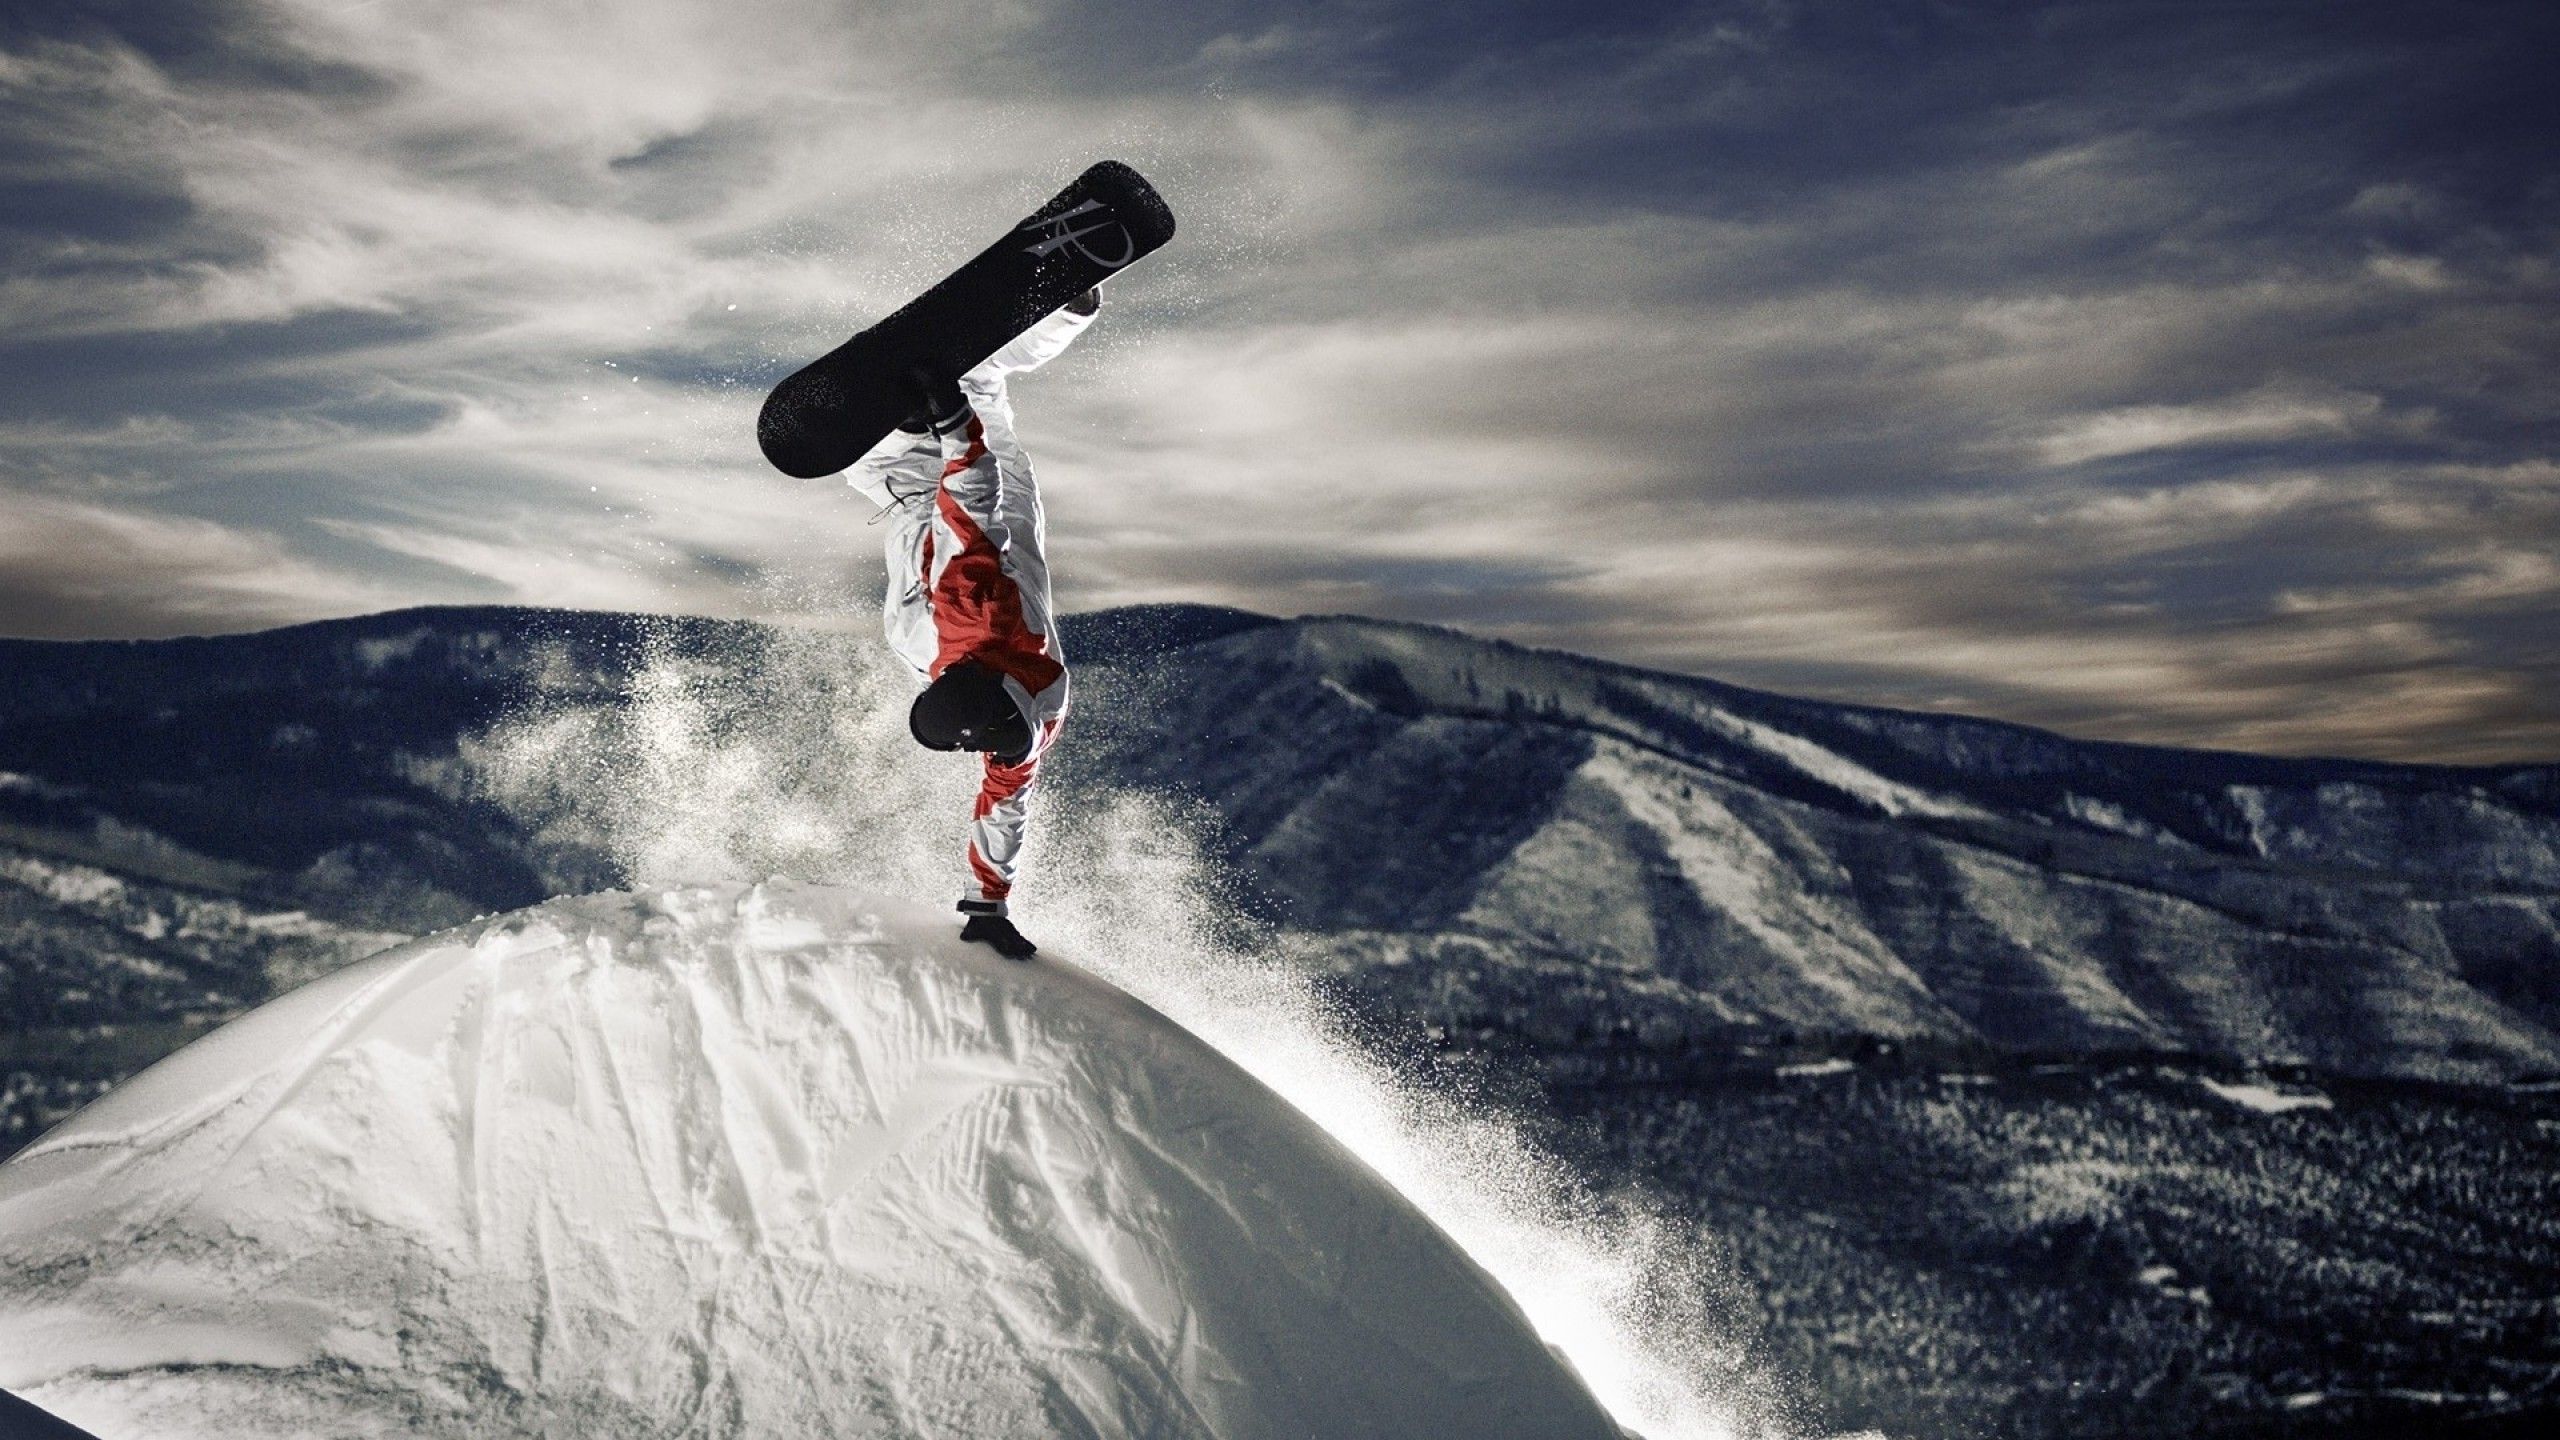 Snowboarding wallpaper 2560x1440